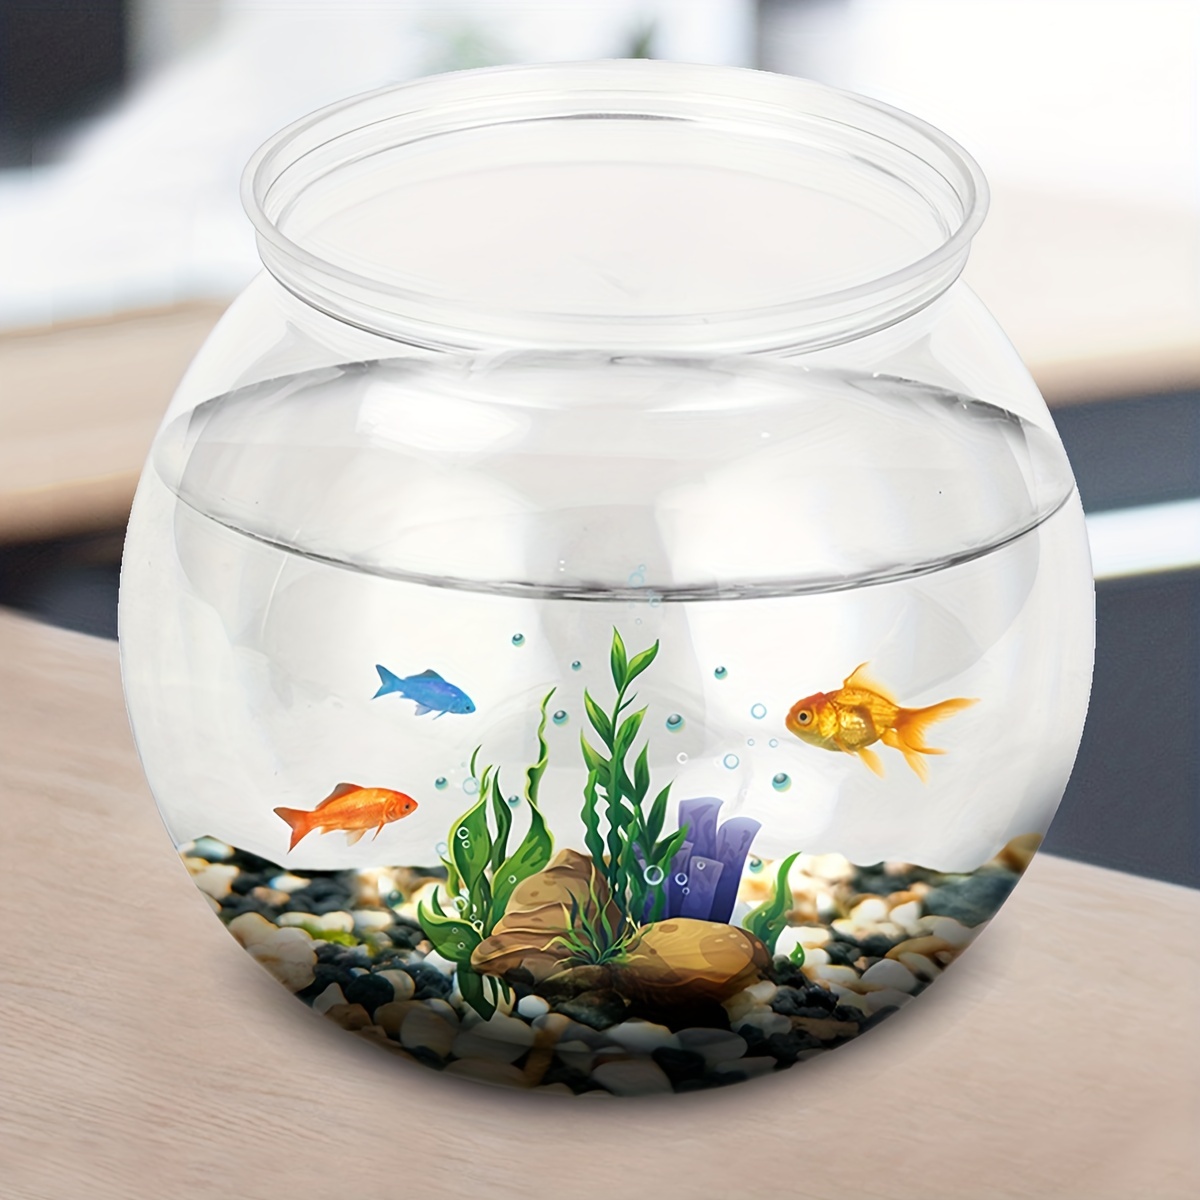 Round Glass Aquarium Bowl with Tiny Peacock Fish Stock Photo - Image of  fishbowl, aquatic: 226917498